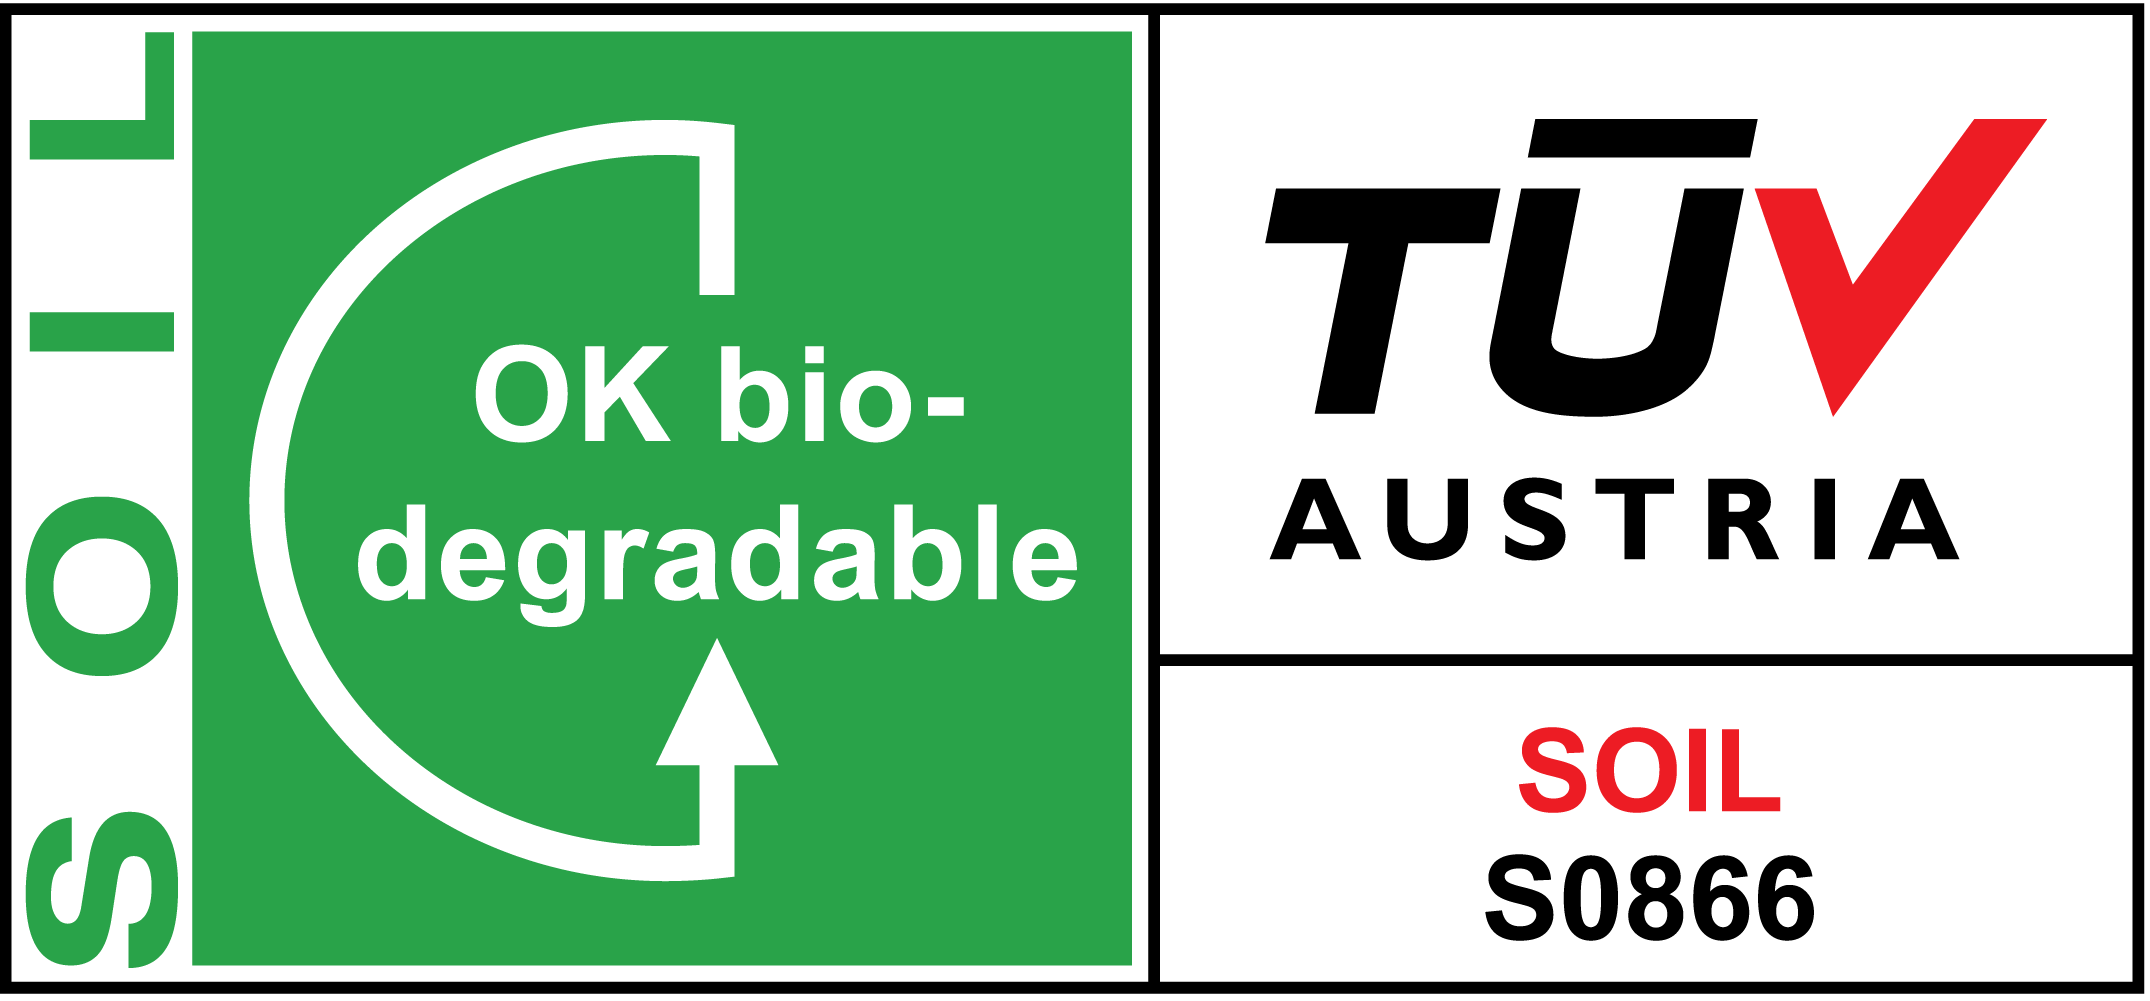 OK biodegradable SOIL certification by TÜV Austria